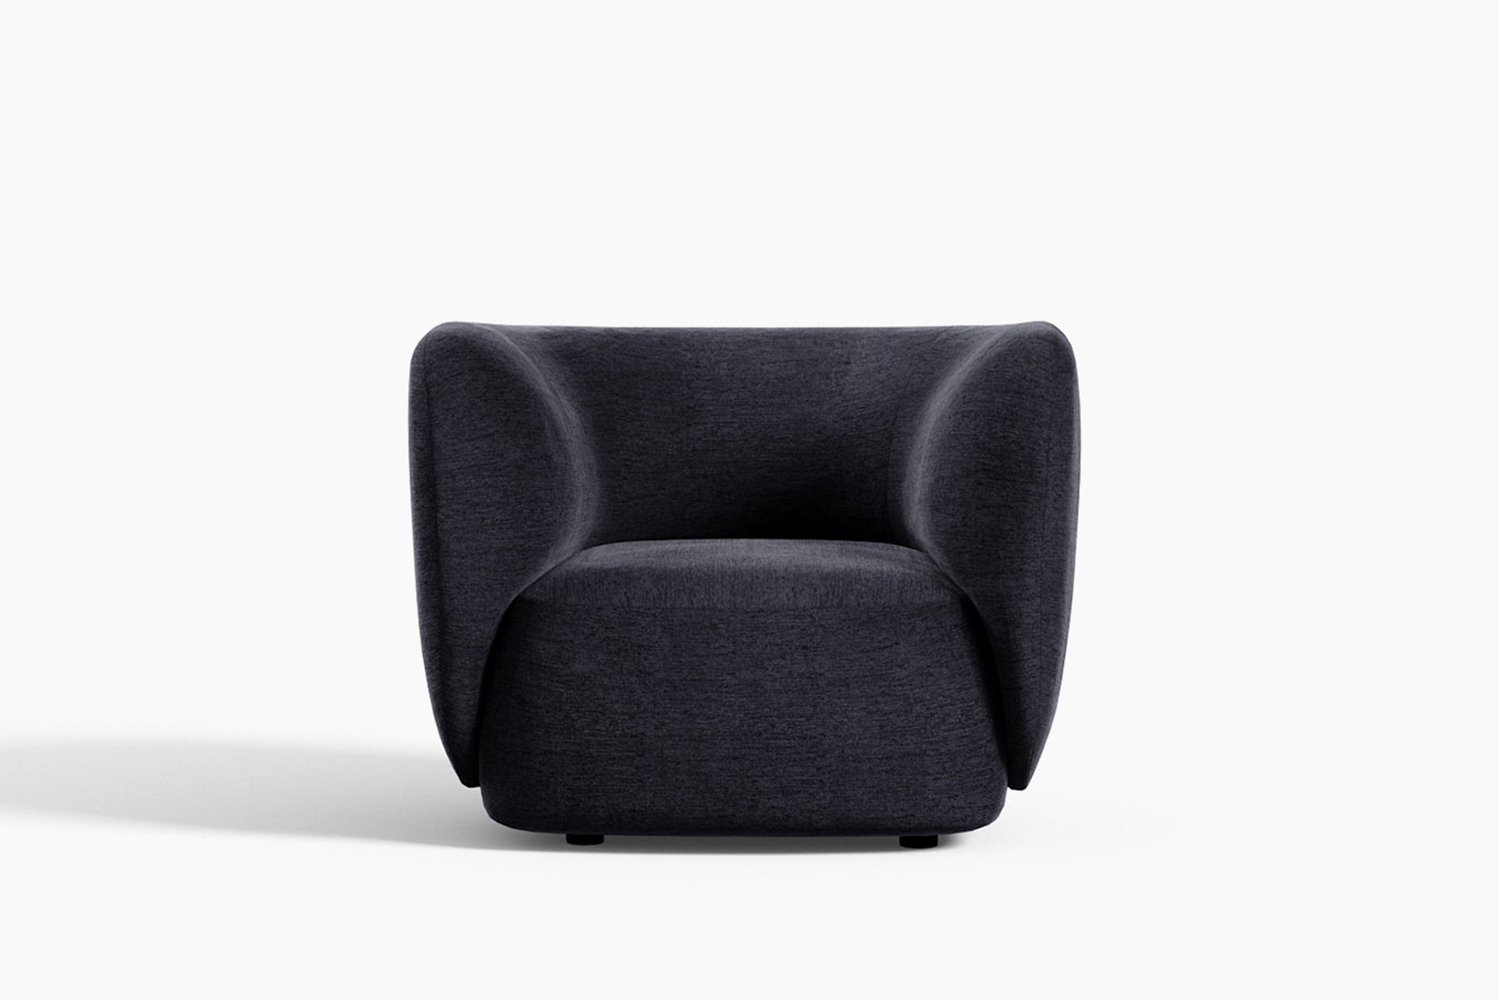 Blossom luxury Italian modern armchair by Novamobili. Sold by Krieder UK.